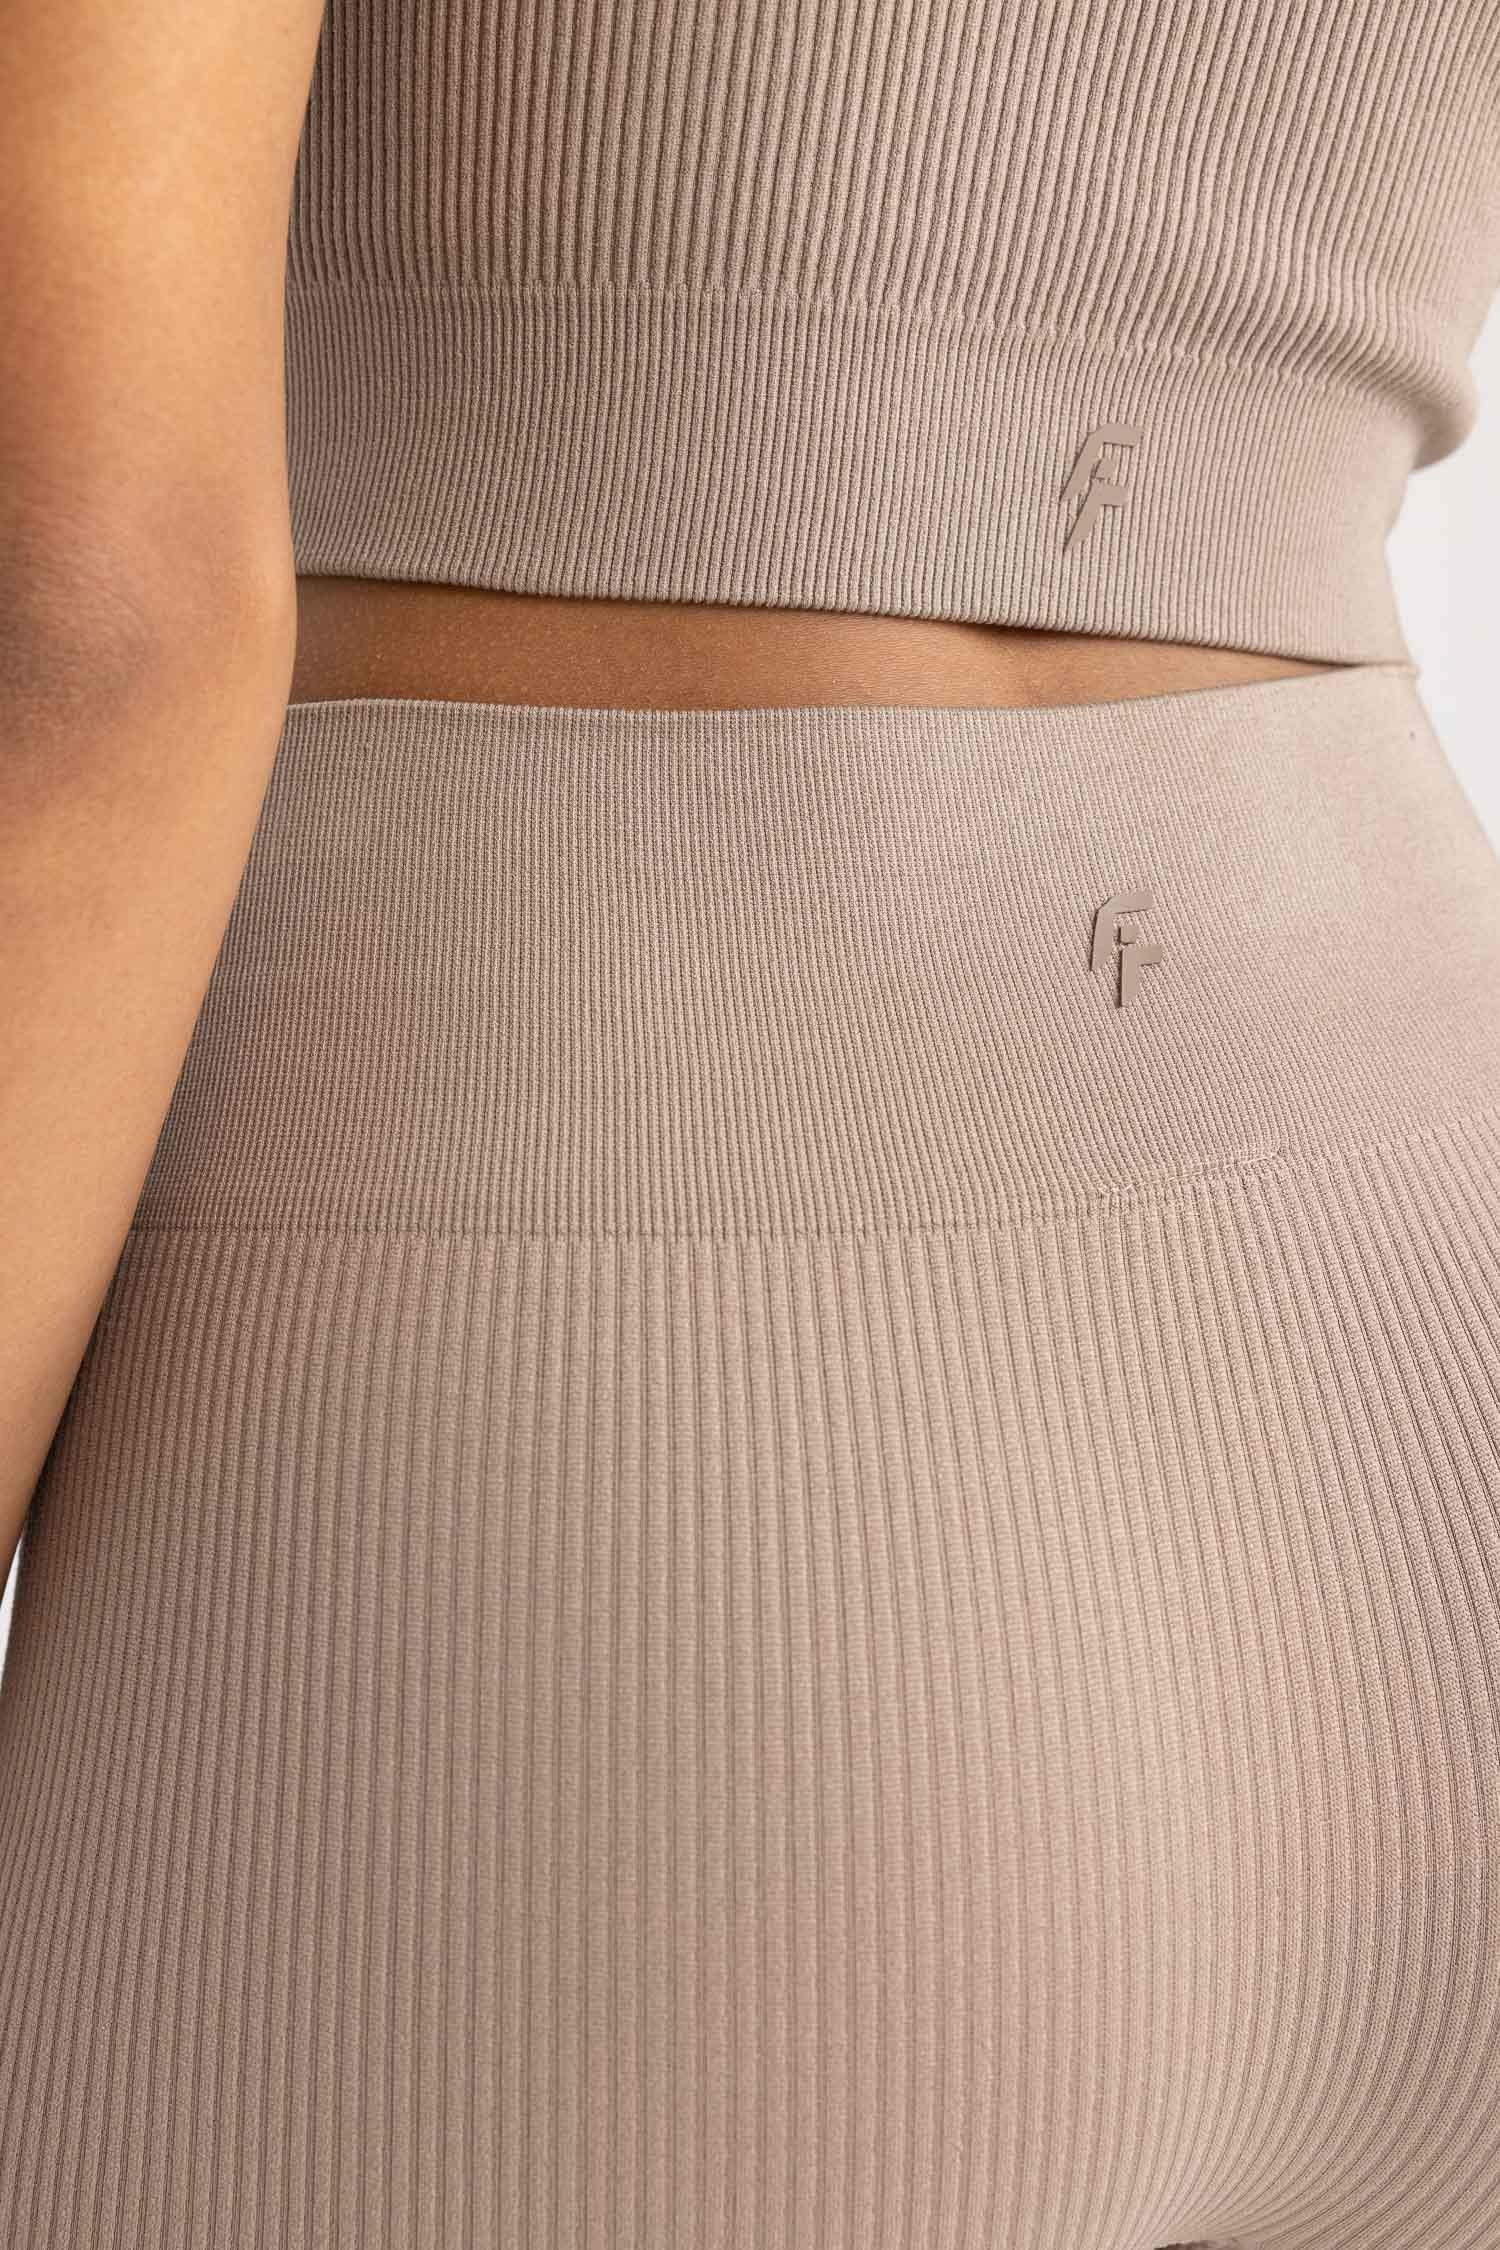 Women's Tan Soft Surroundings Metro Leggings, Size S, RN 101206, Style  27431